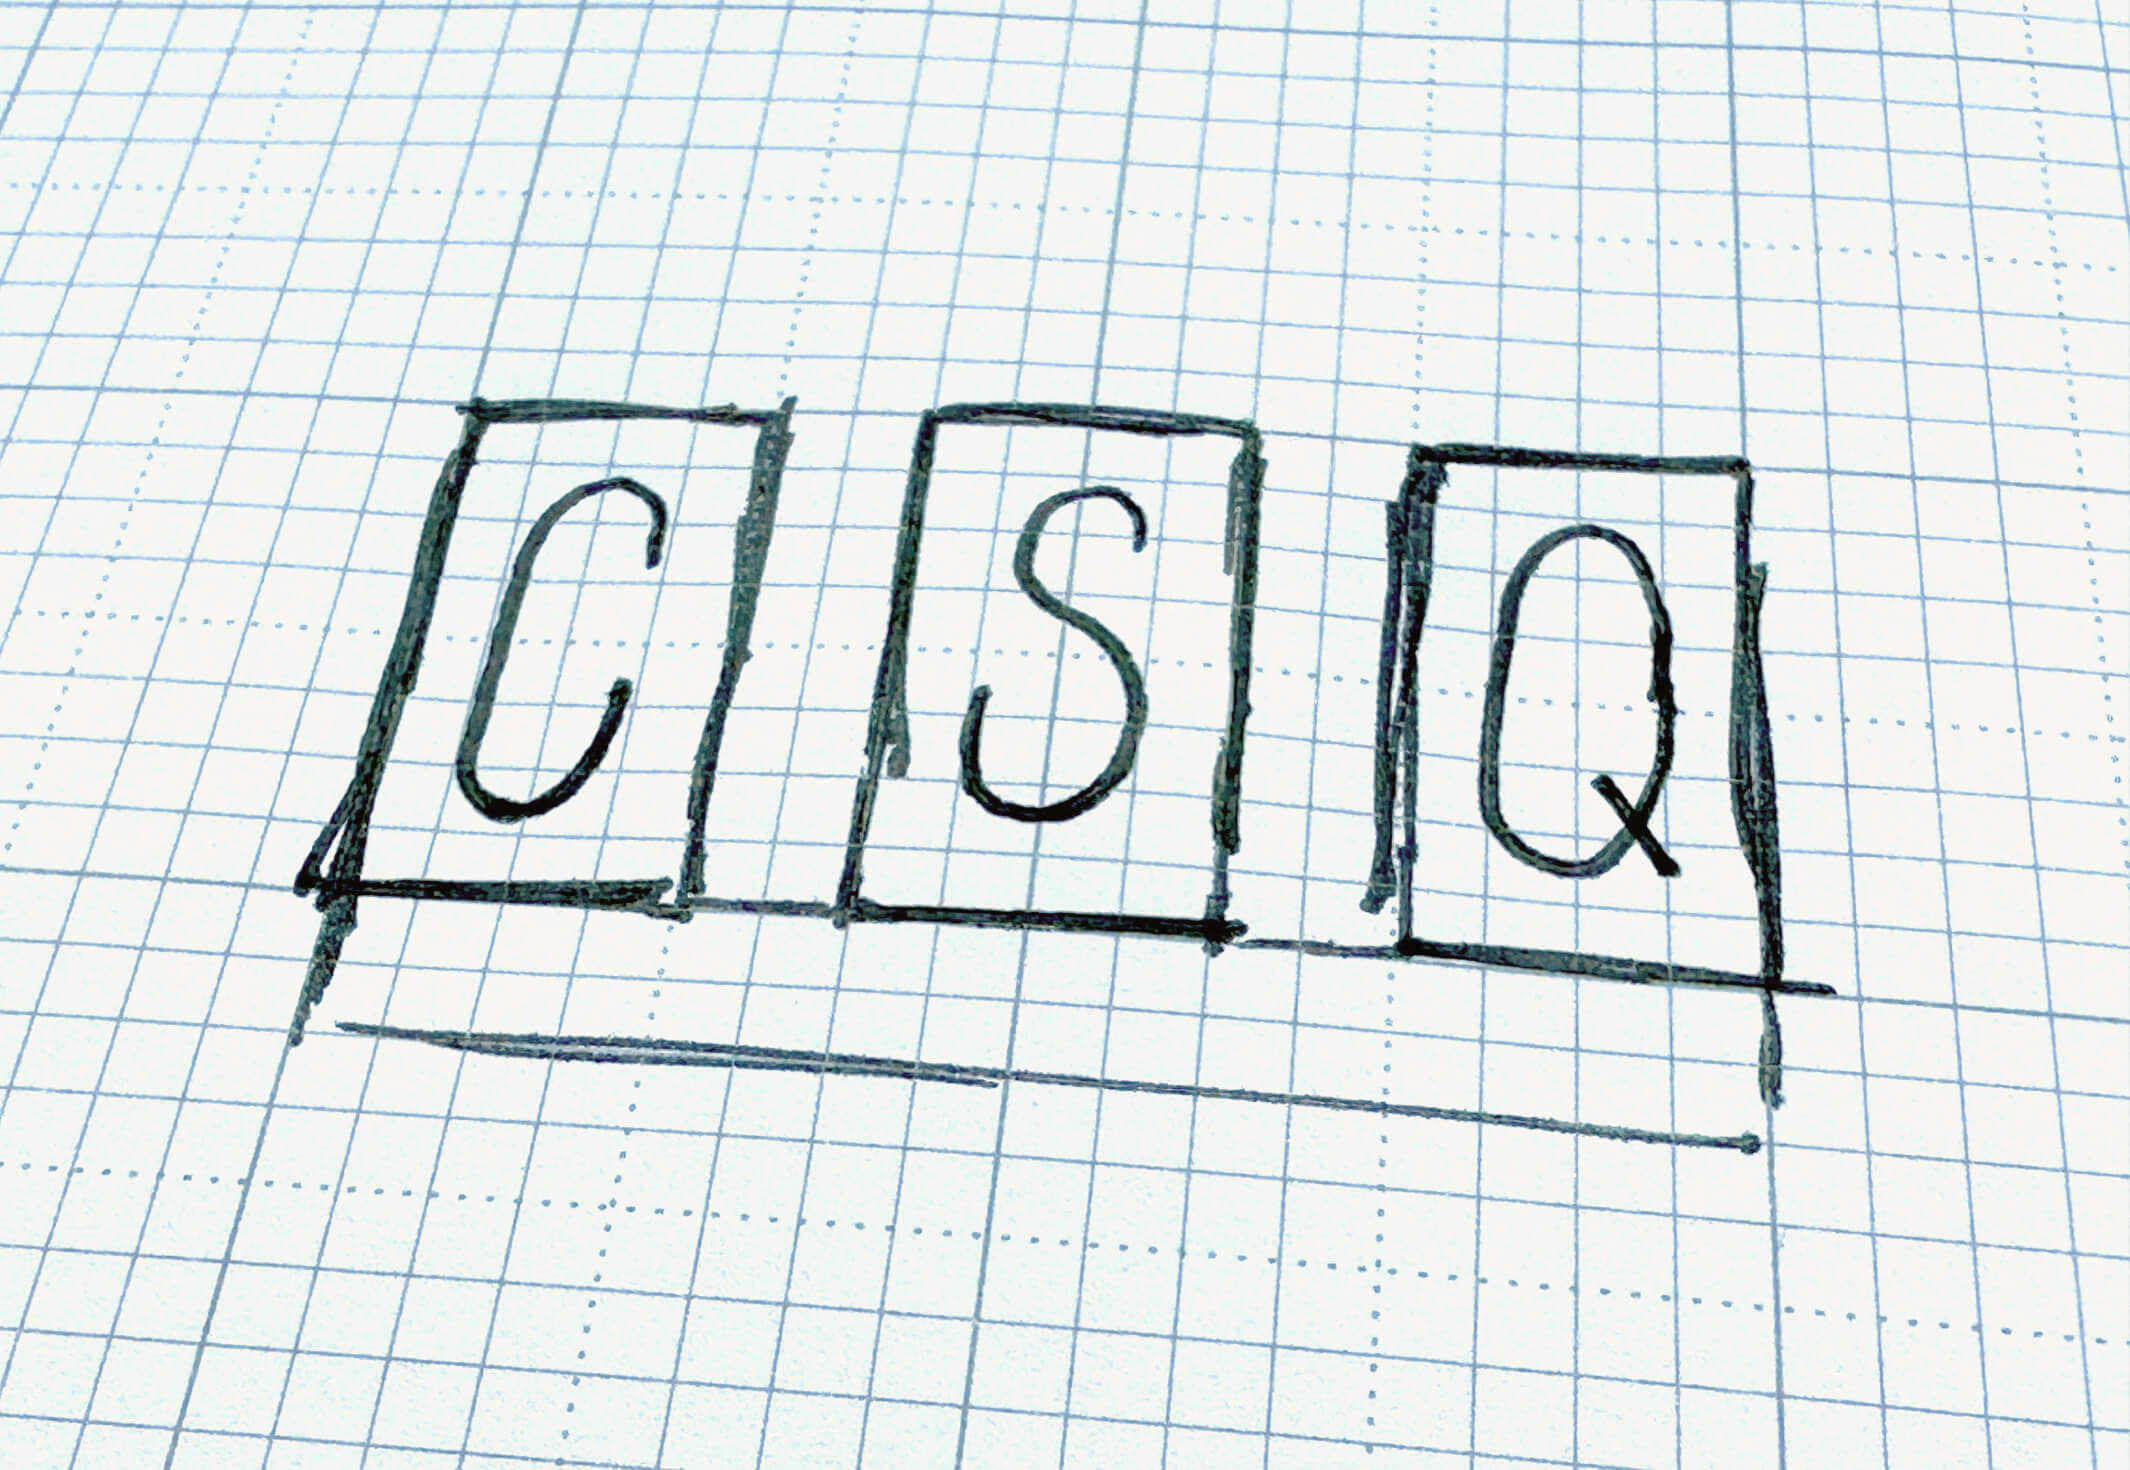 A preliminary sketch for the CSQ logo